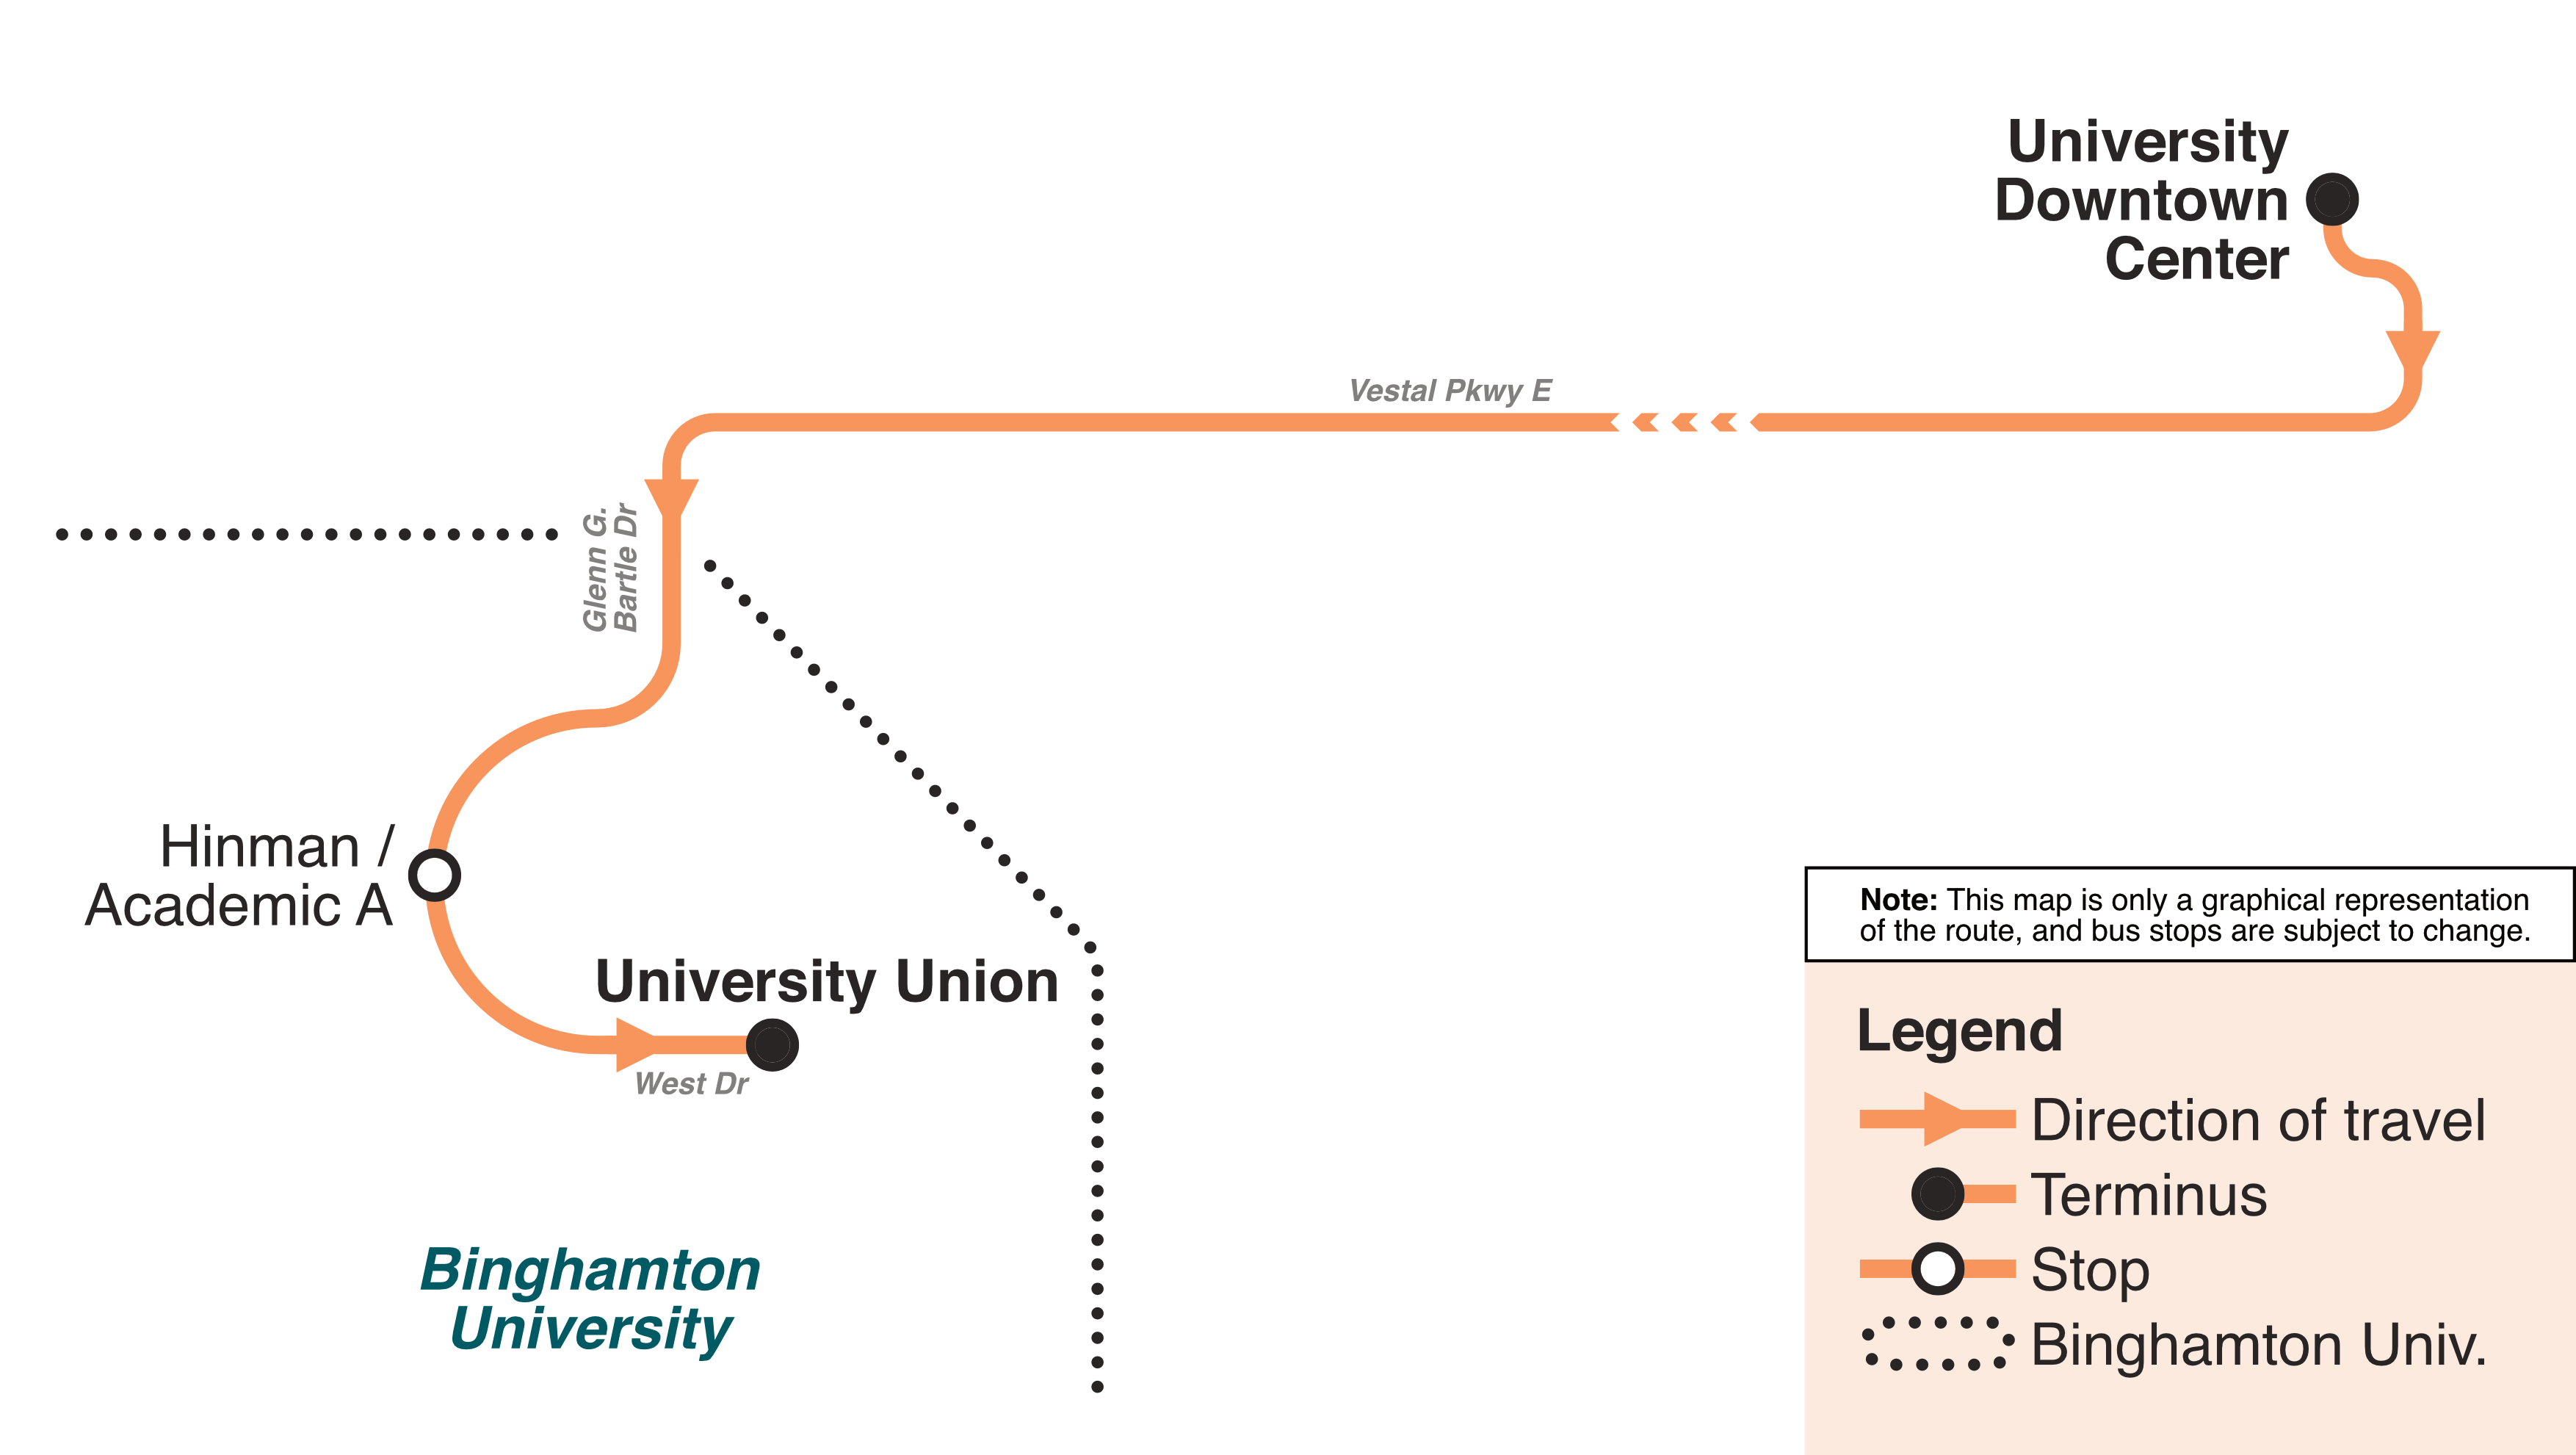 University Downtown Center Inbound Route Map